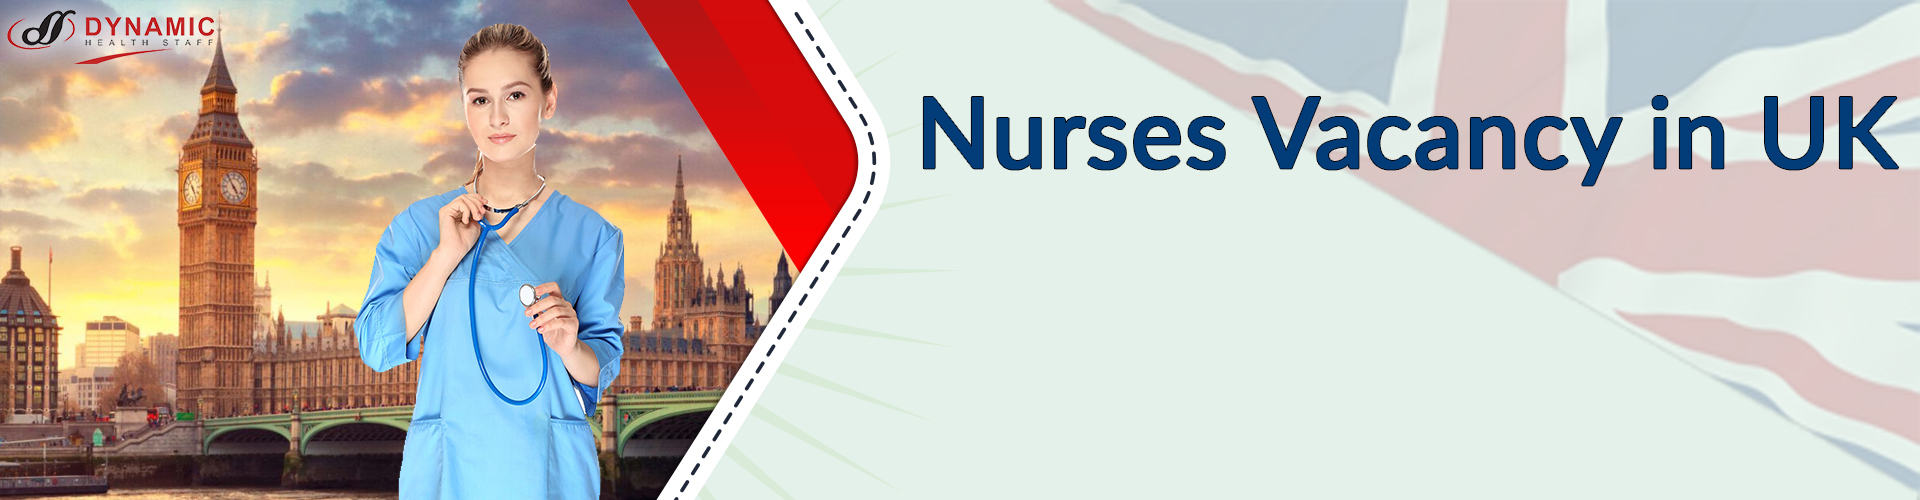 Nurses Vacancy in UK